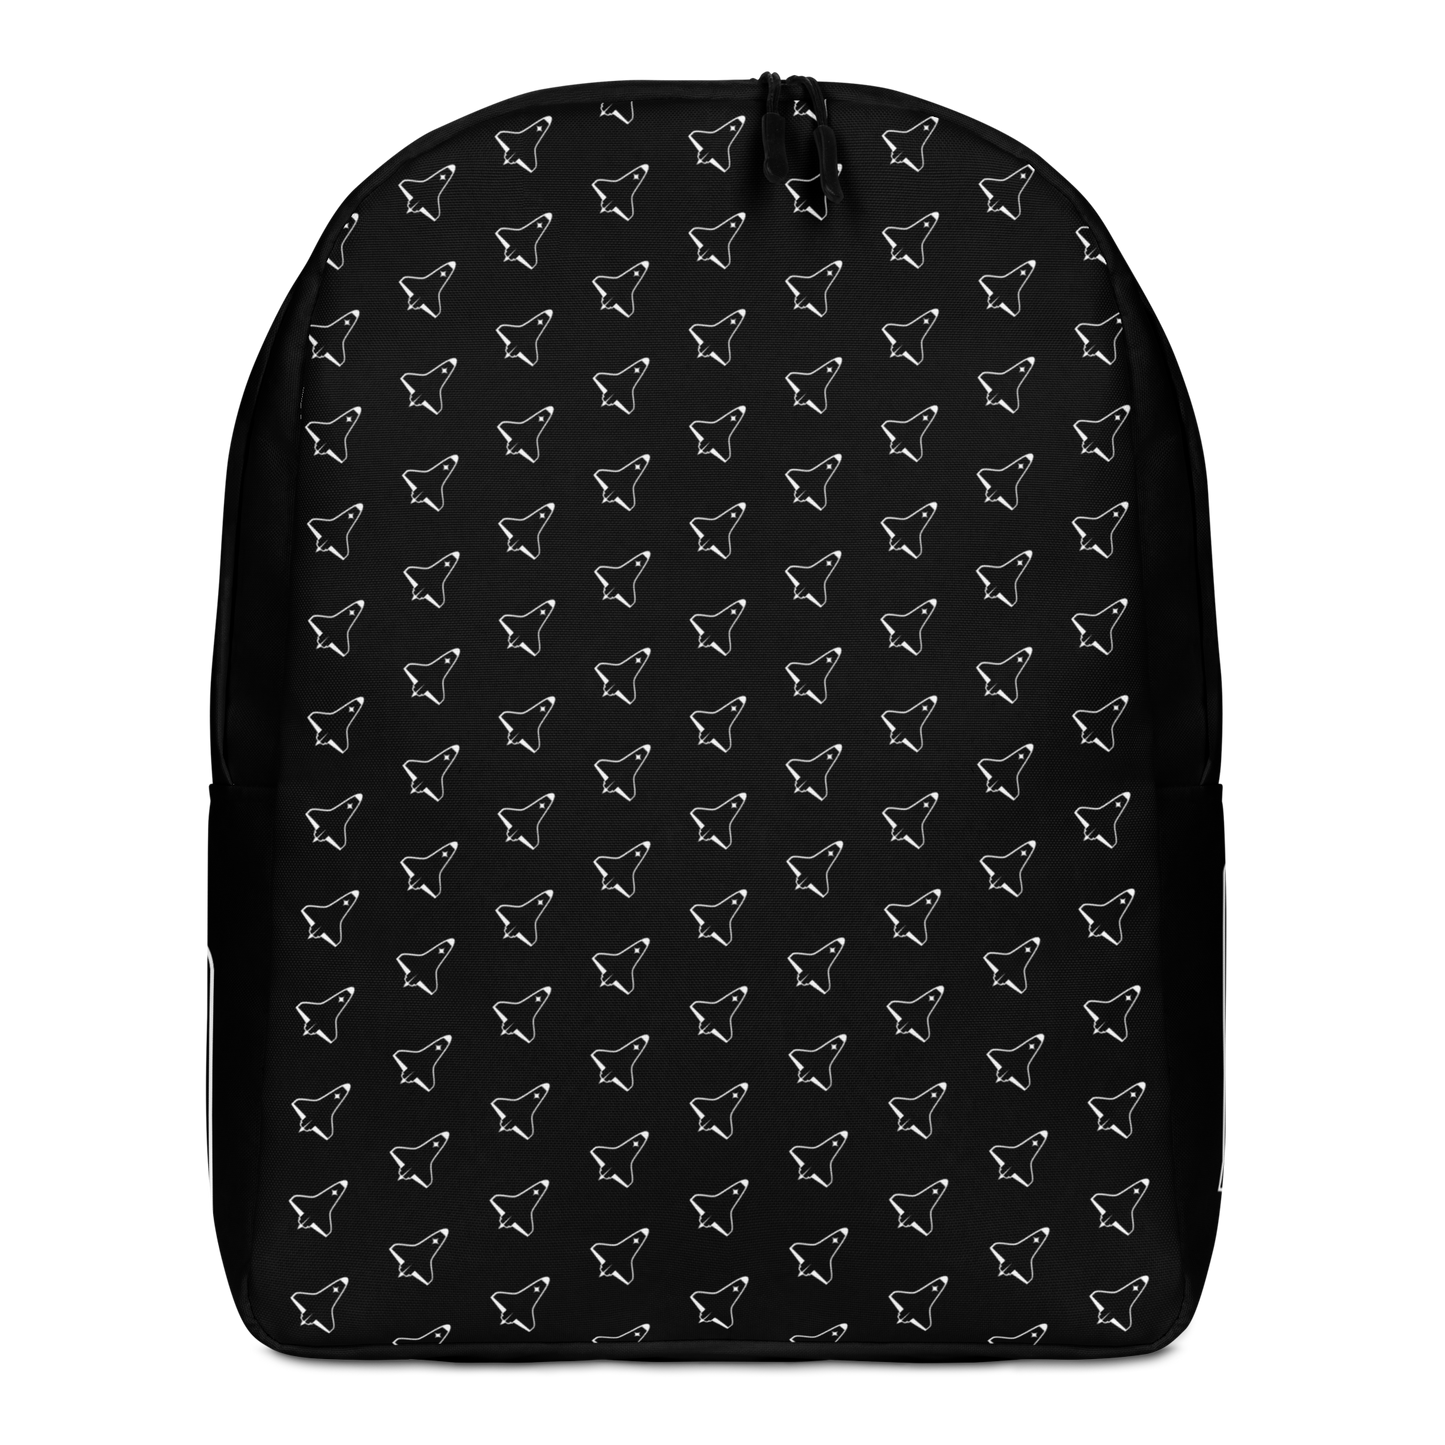 YSUG Astro - Backpack